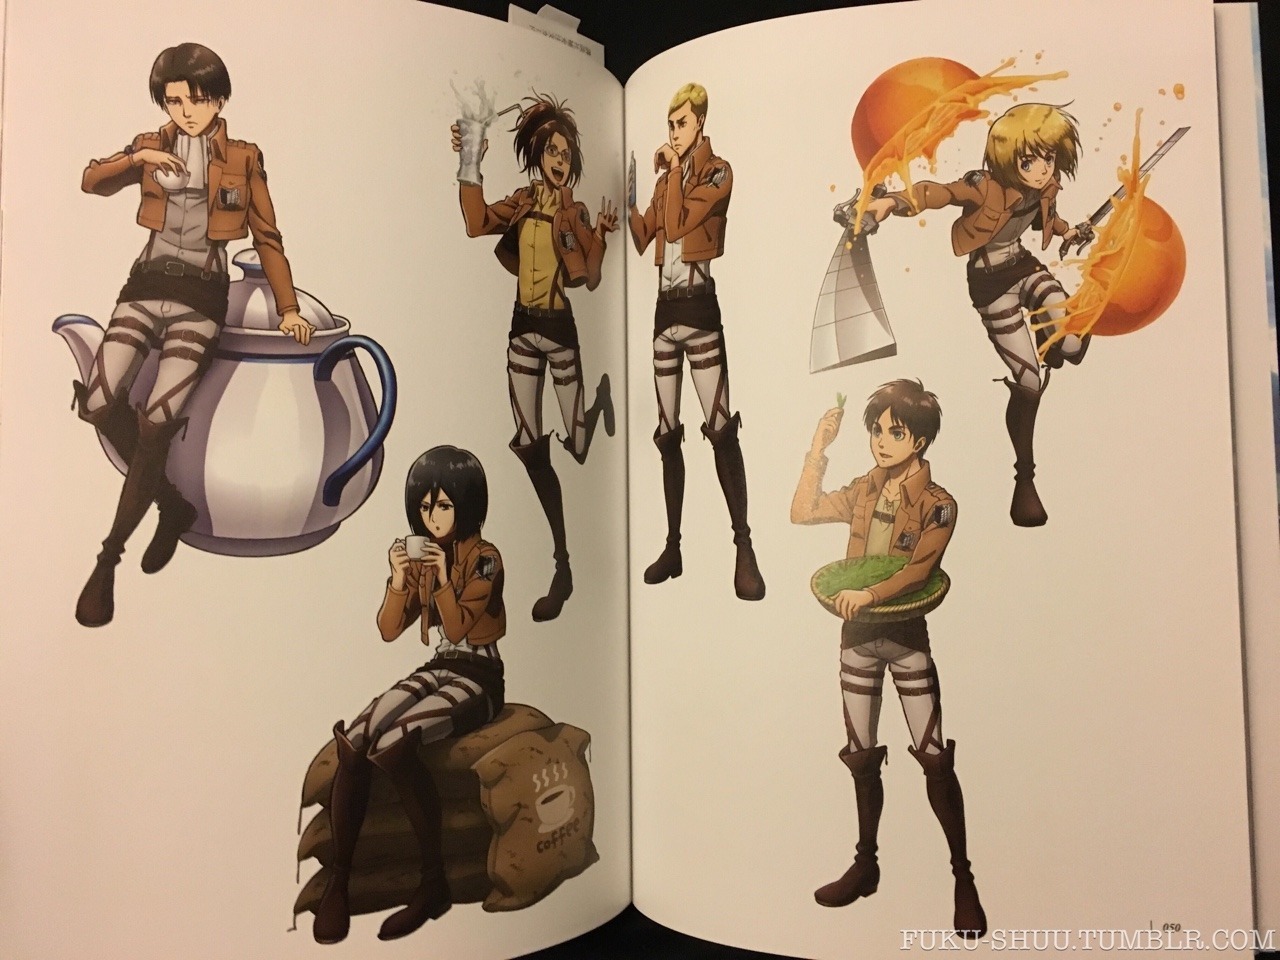 A Look Inside the Shingeki no Kyojin ANIME ILLUSTRATIONS Artbook by WIT Studio!I